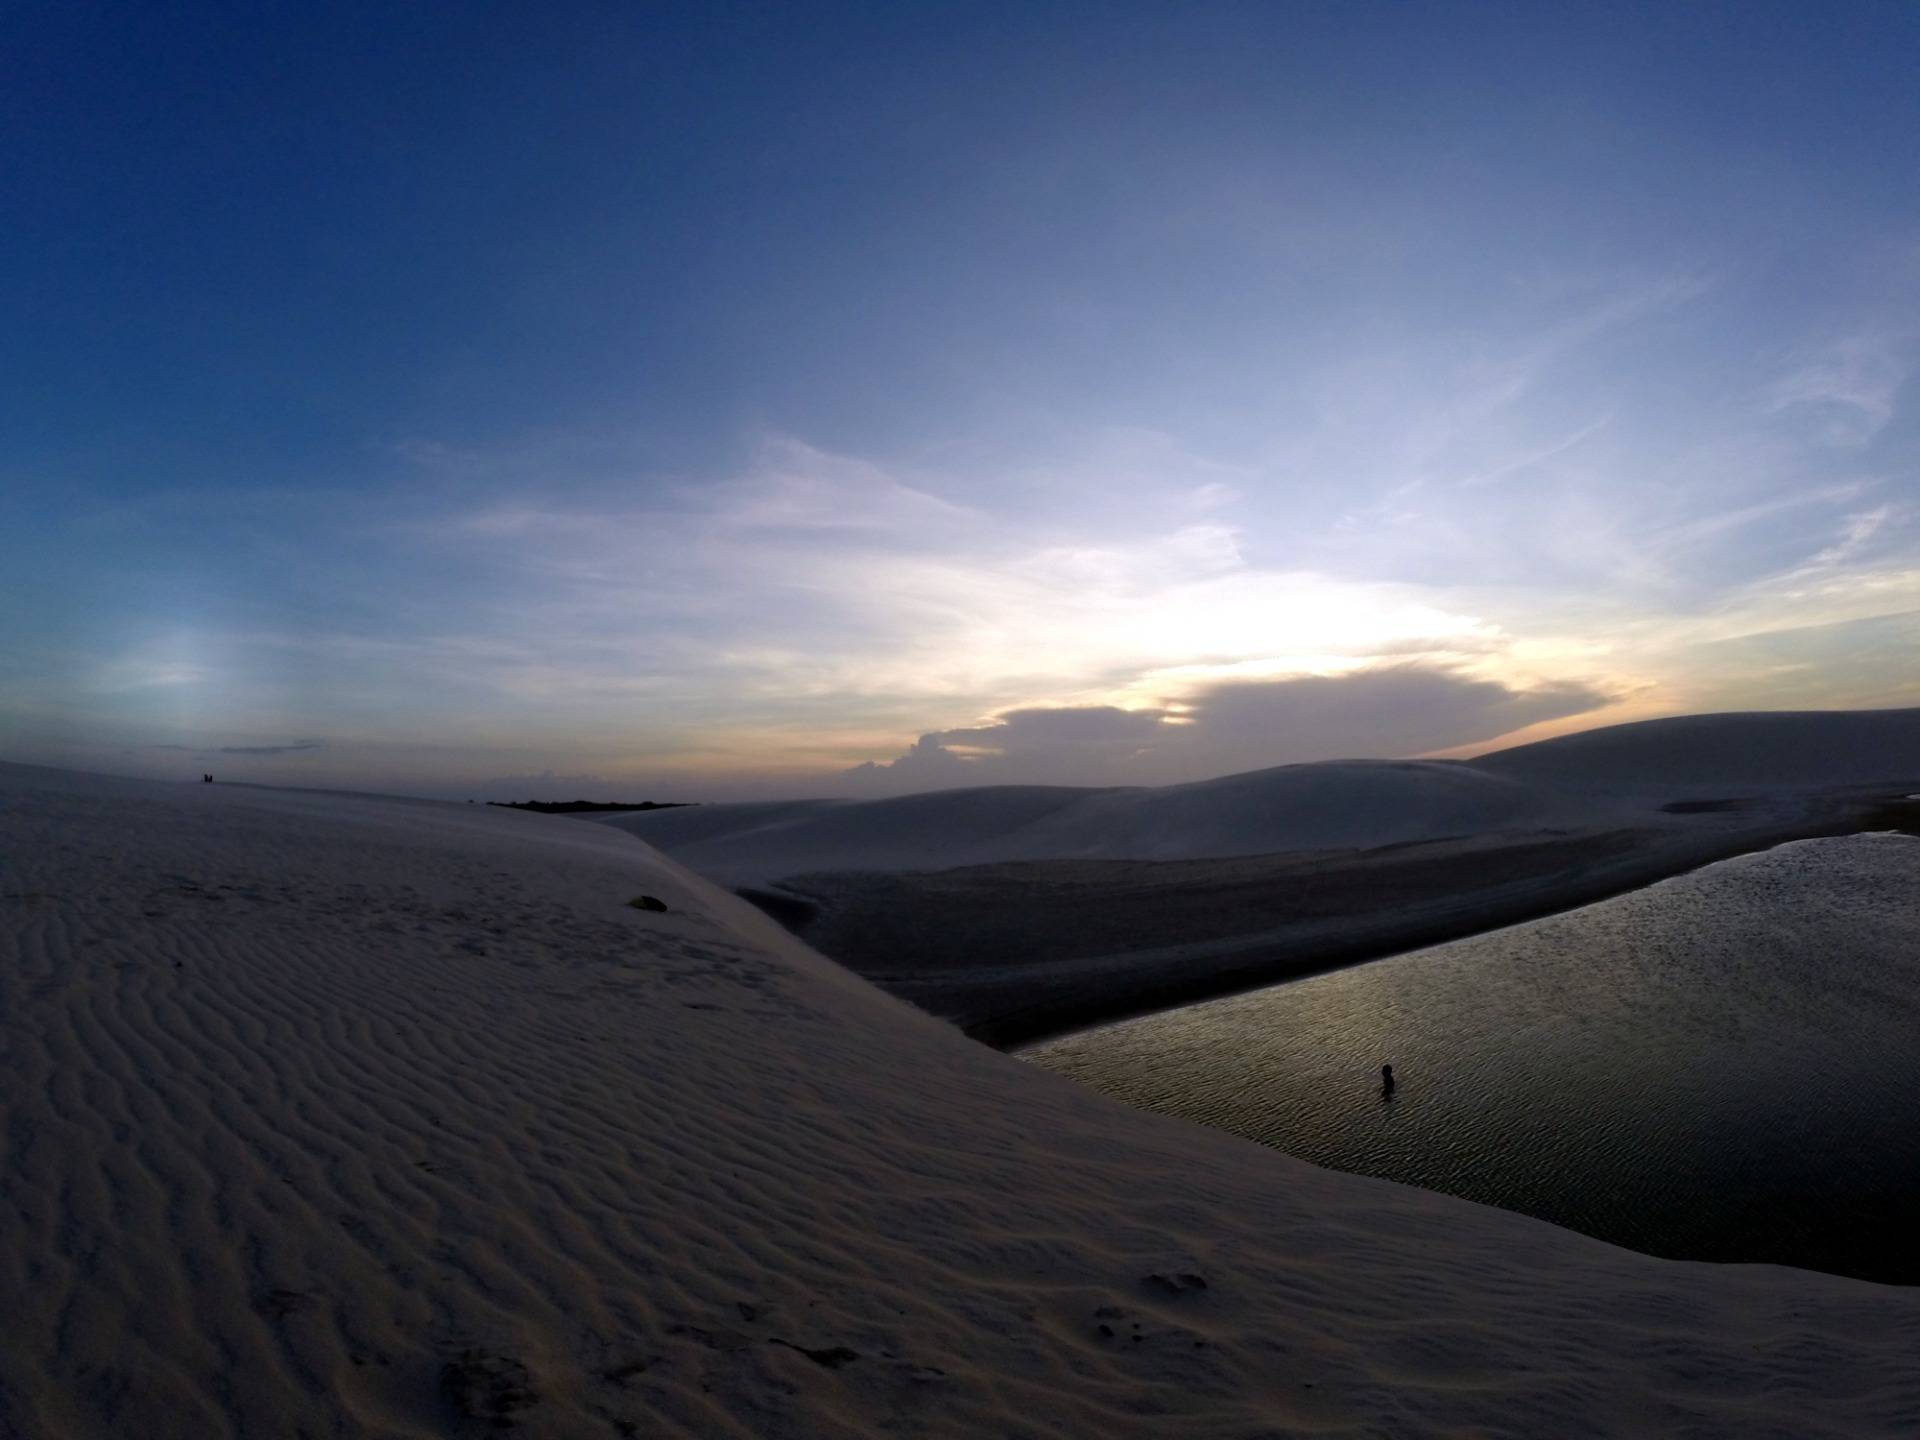 sunset at dunes - natural pools dive